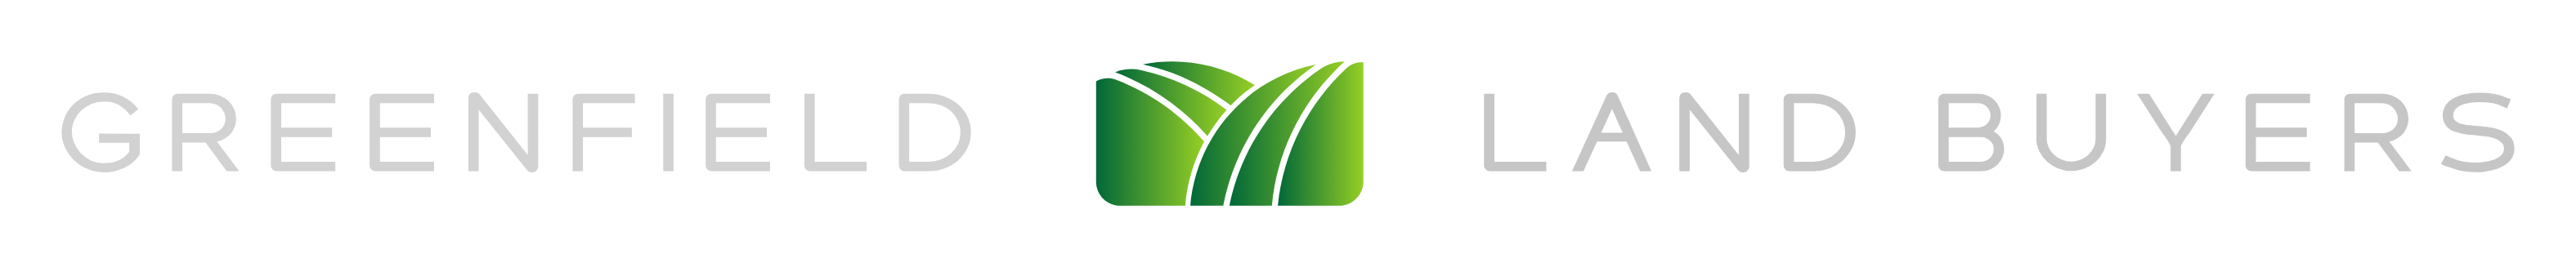 GreenField Land Buyers logo